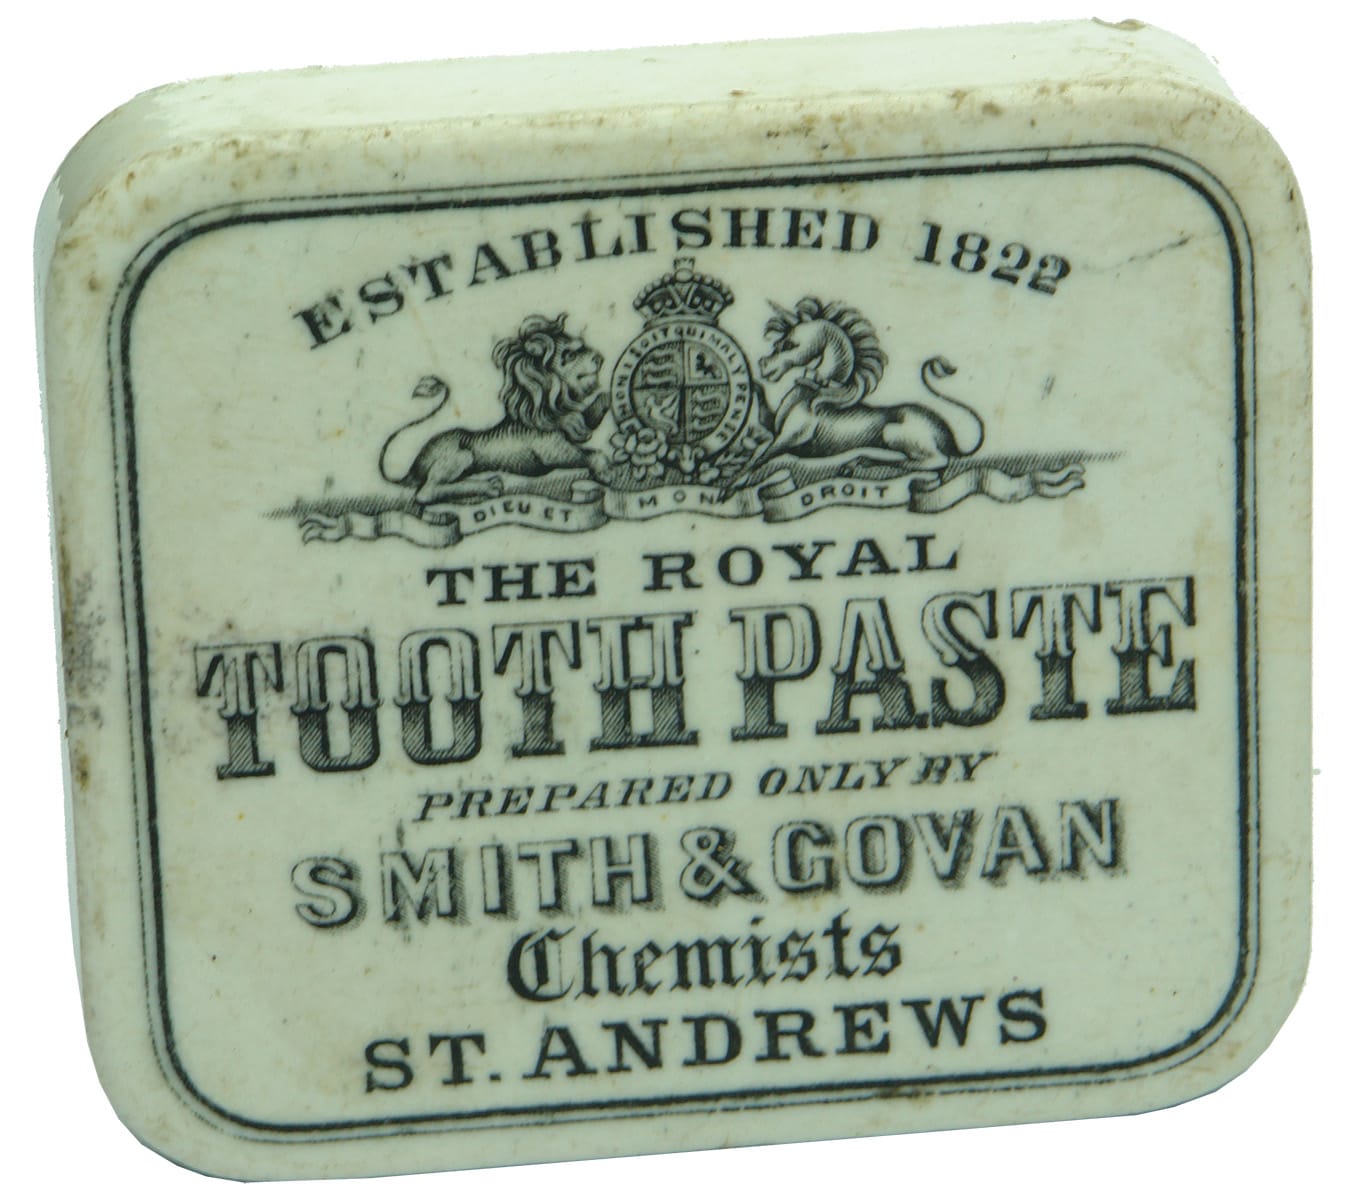 Smith Govan Chemists St Andrews Tooth Paste Pot Lid